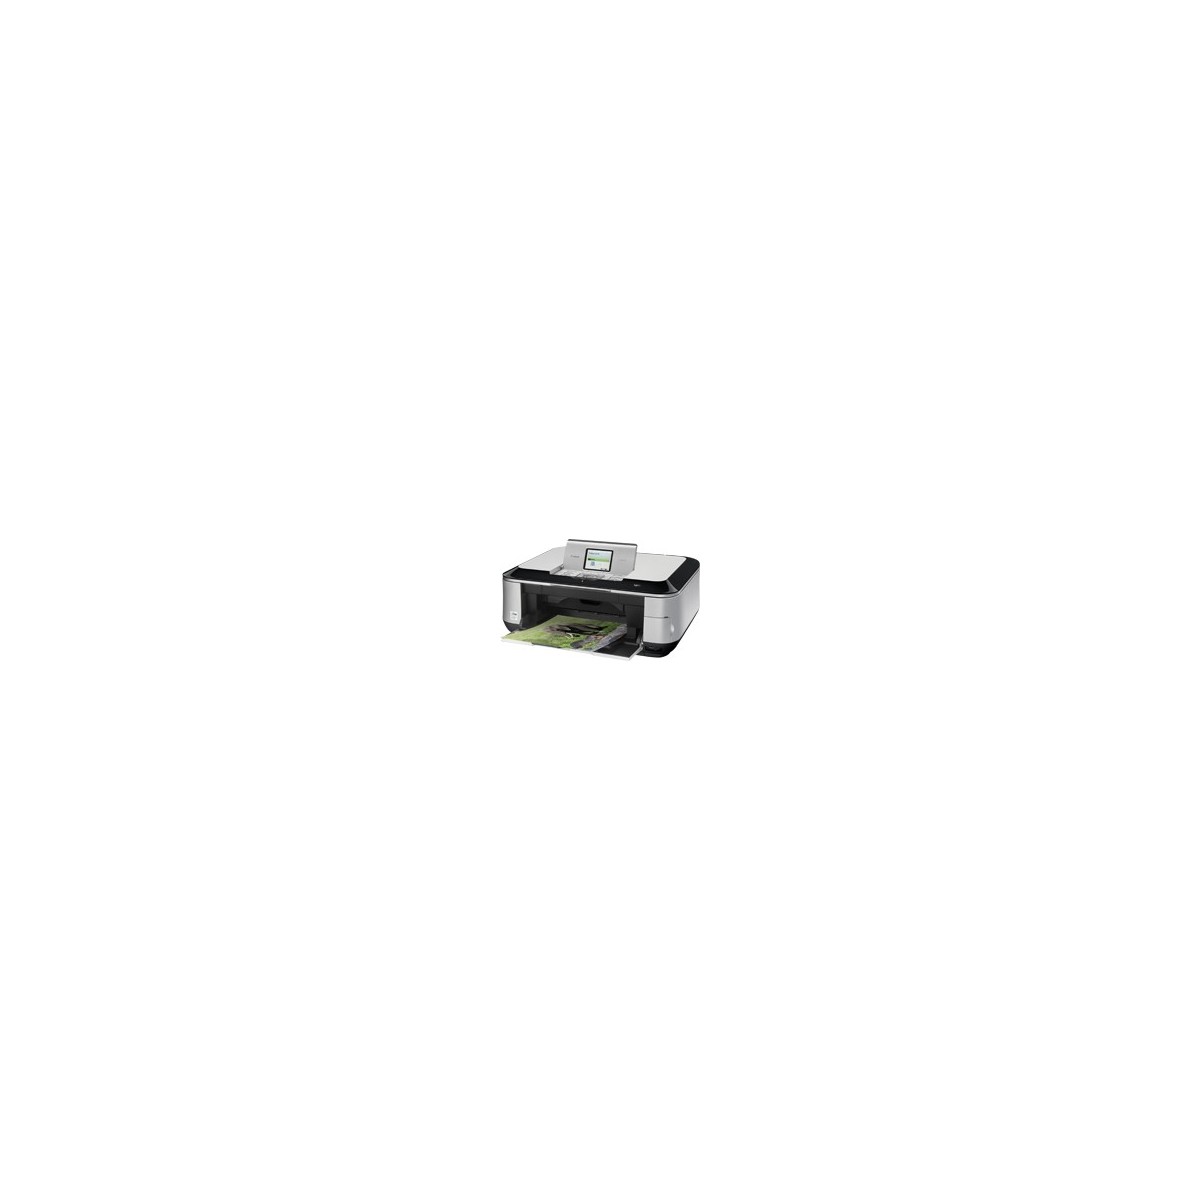 Canon MP640 Inkjet Multifunction Printer - Colored - 9.2 ppm - USB RJ-45